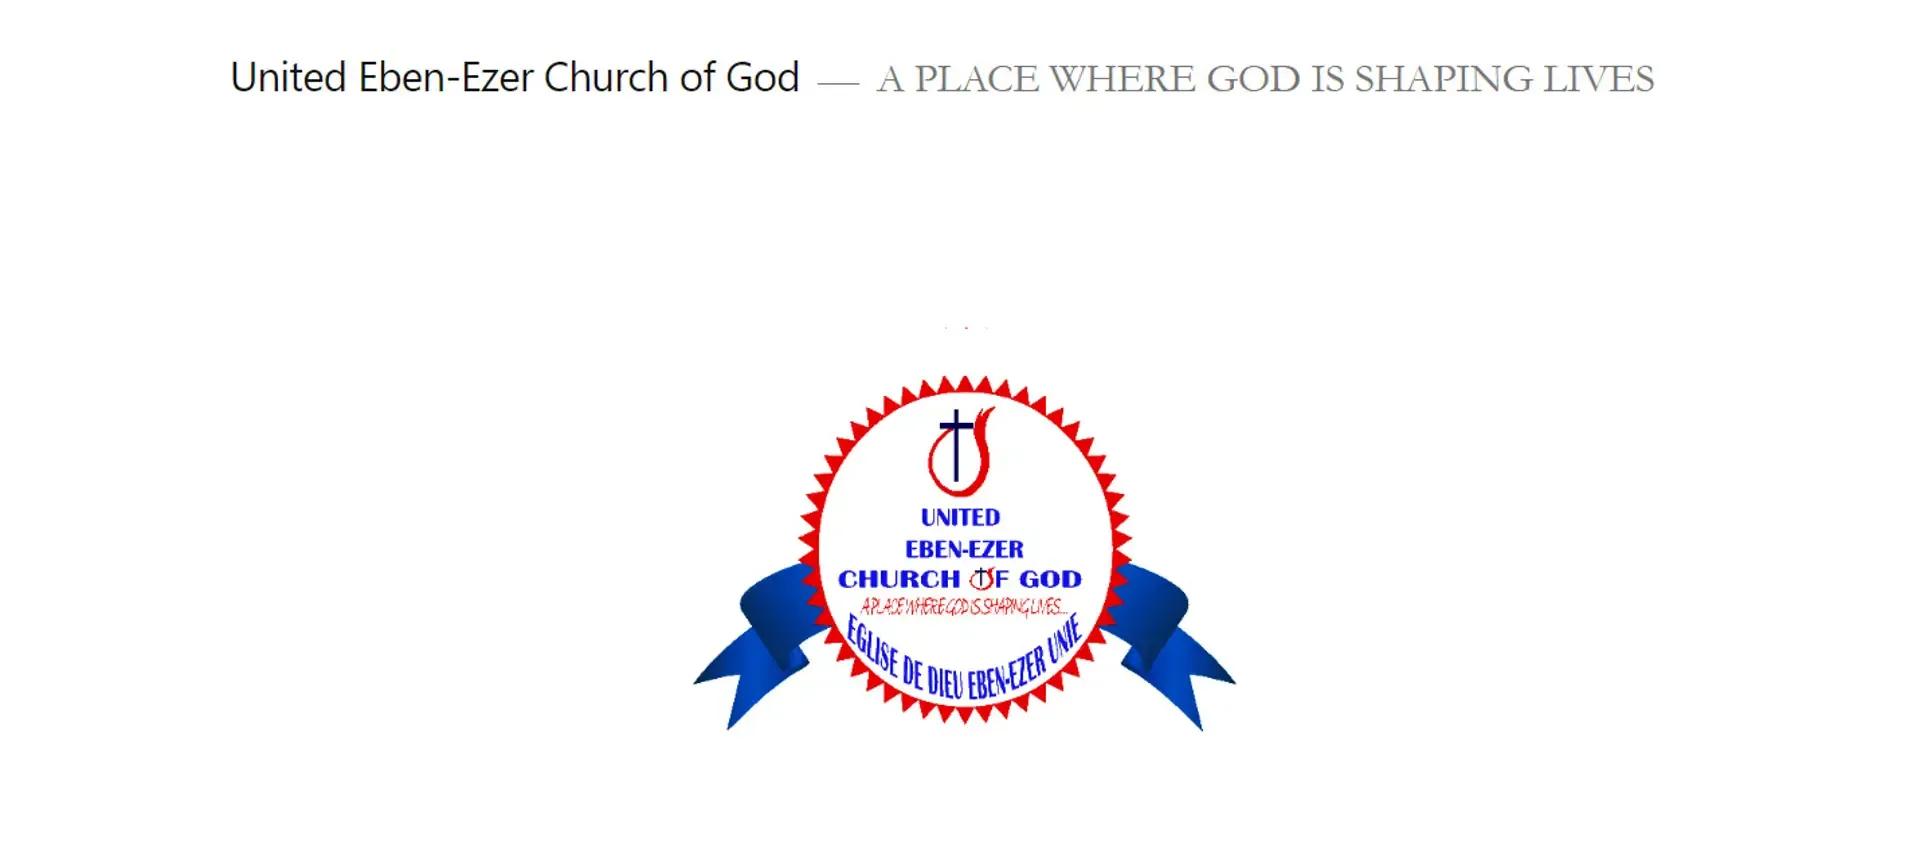 United Eben-Ezer Church of God